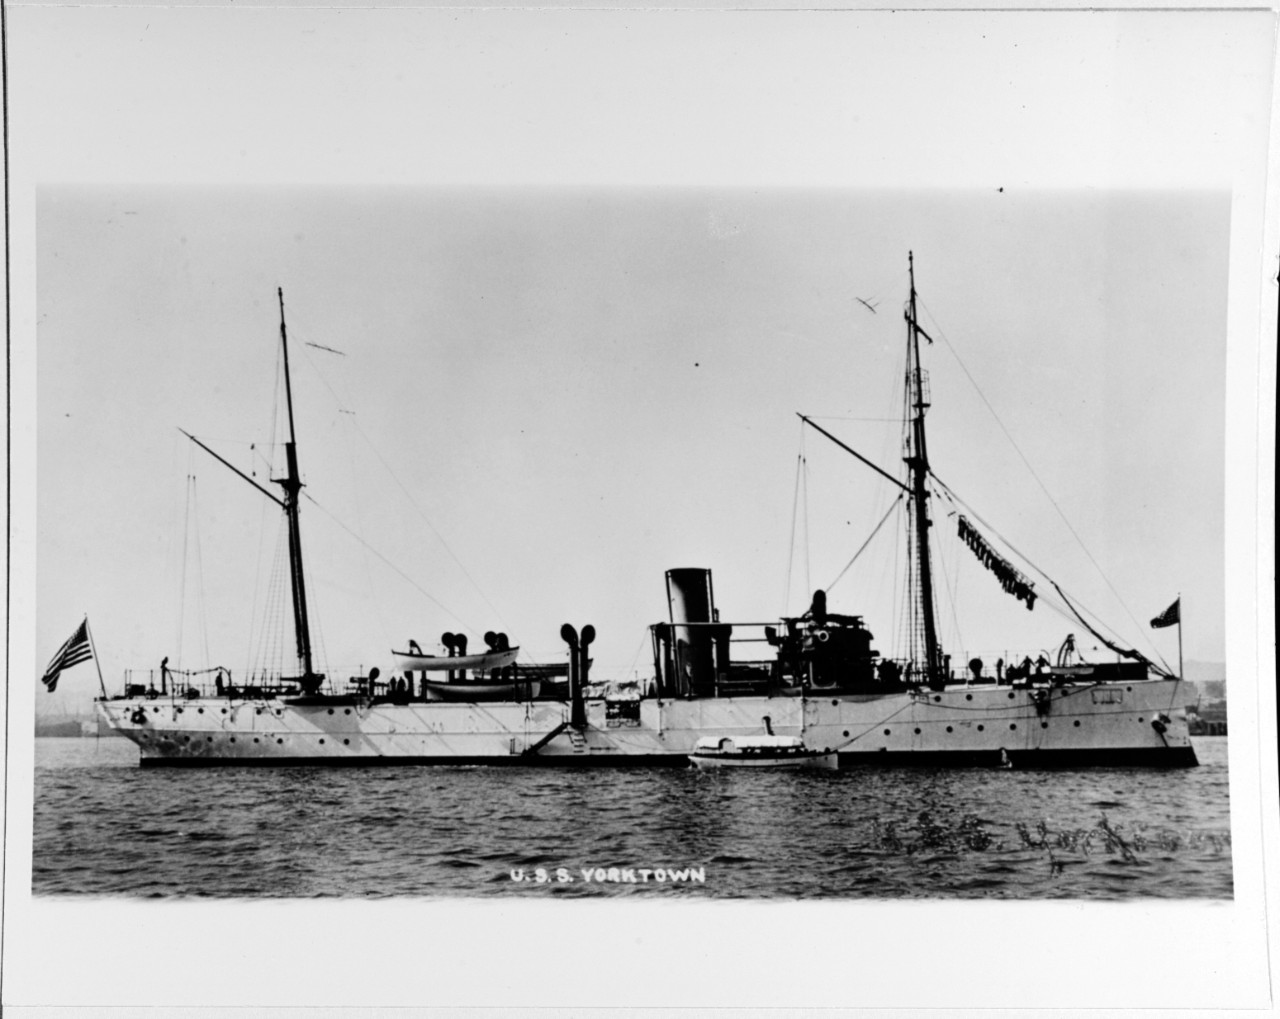 USS YORKTOWN (PG-1) 1889-1921.